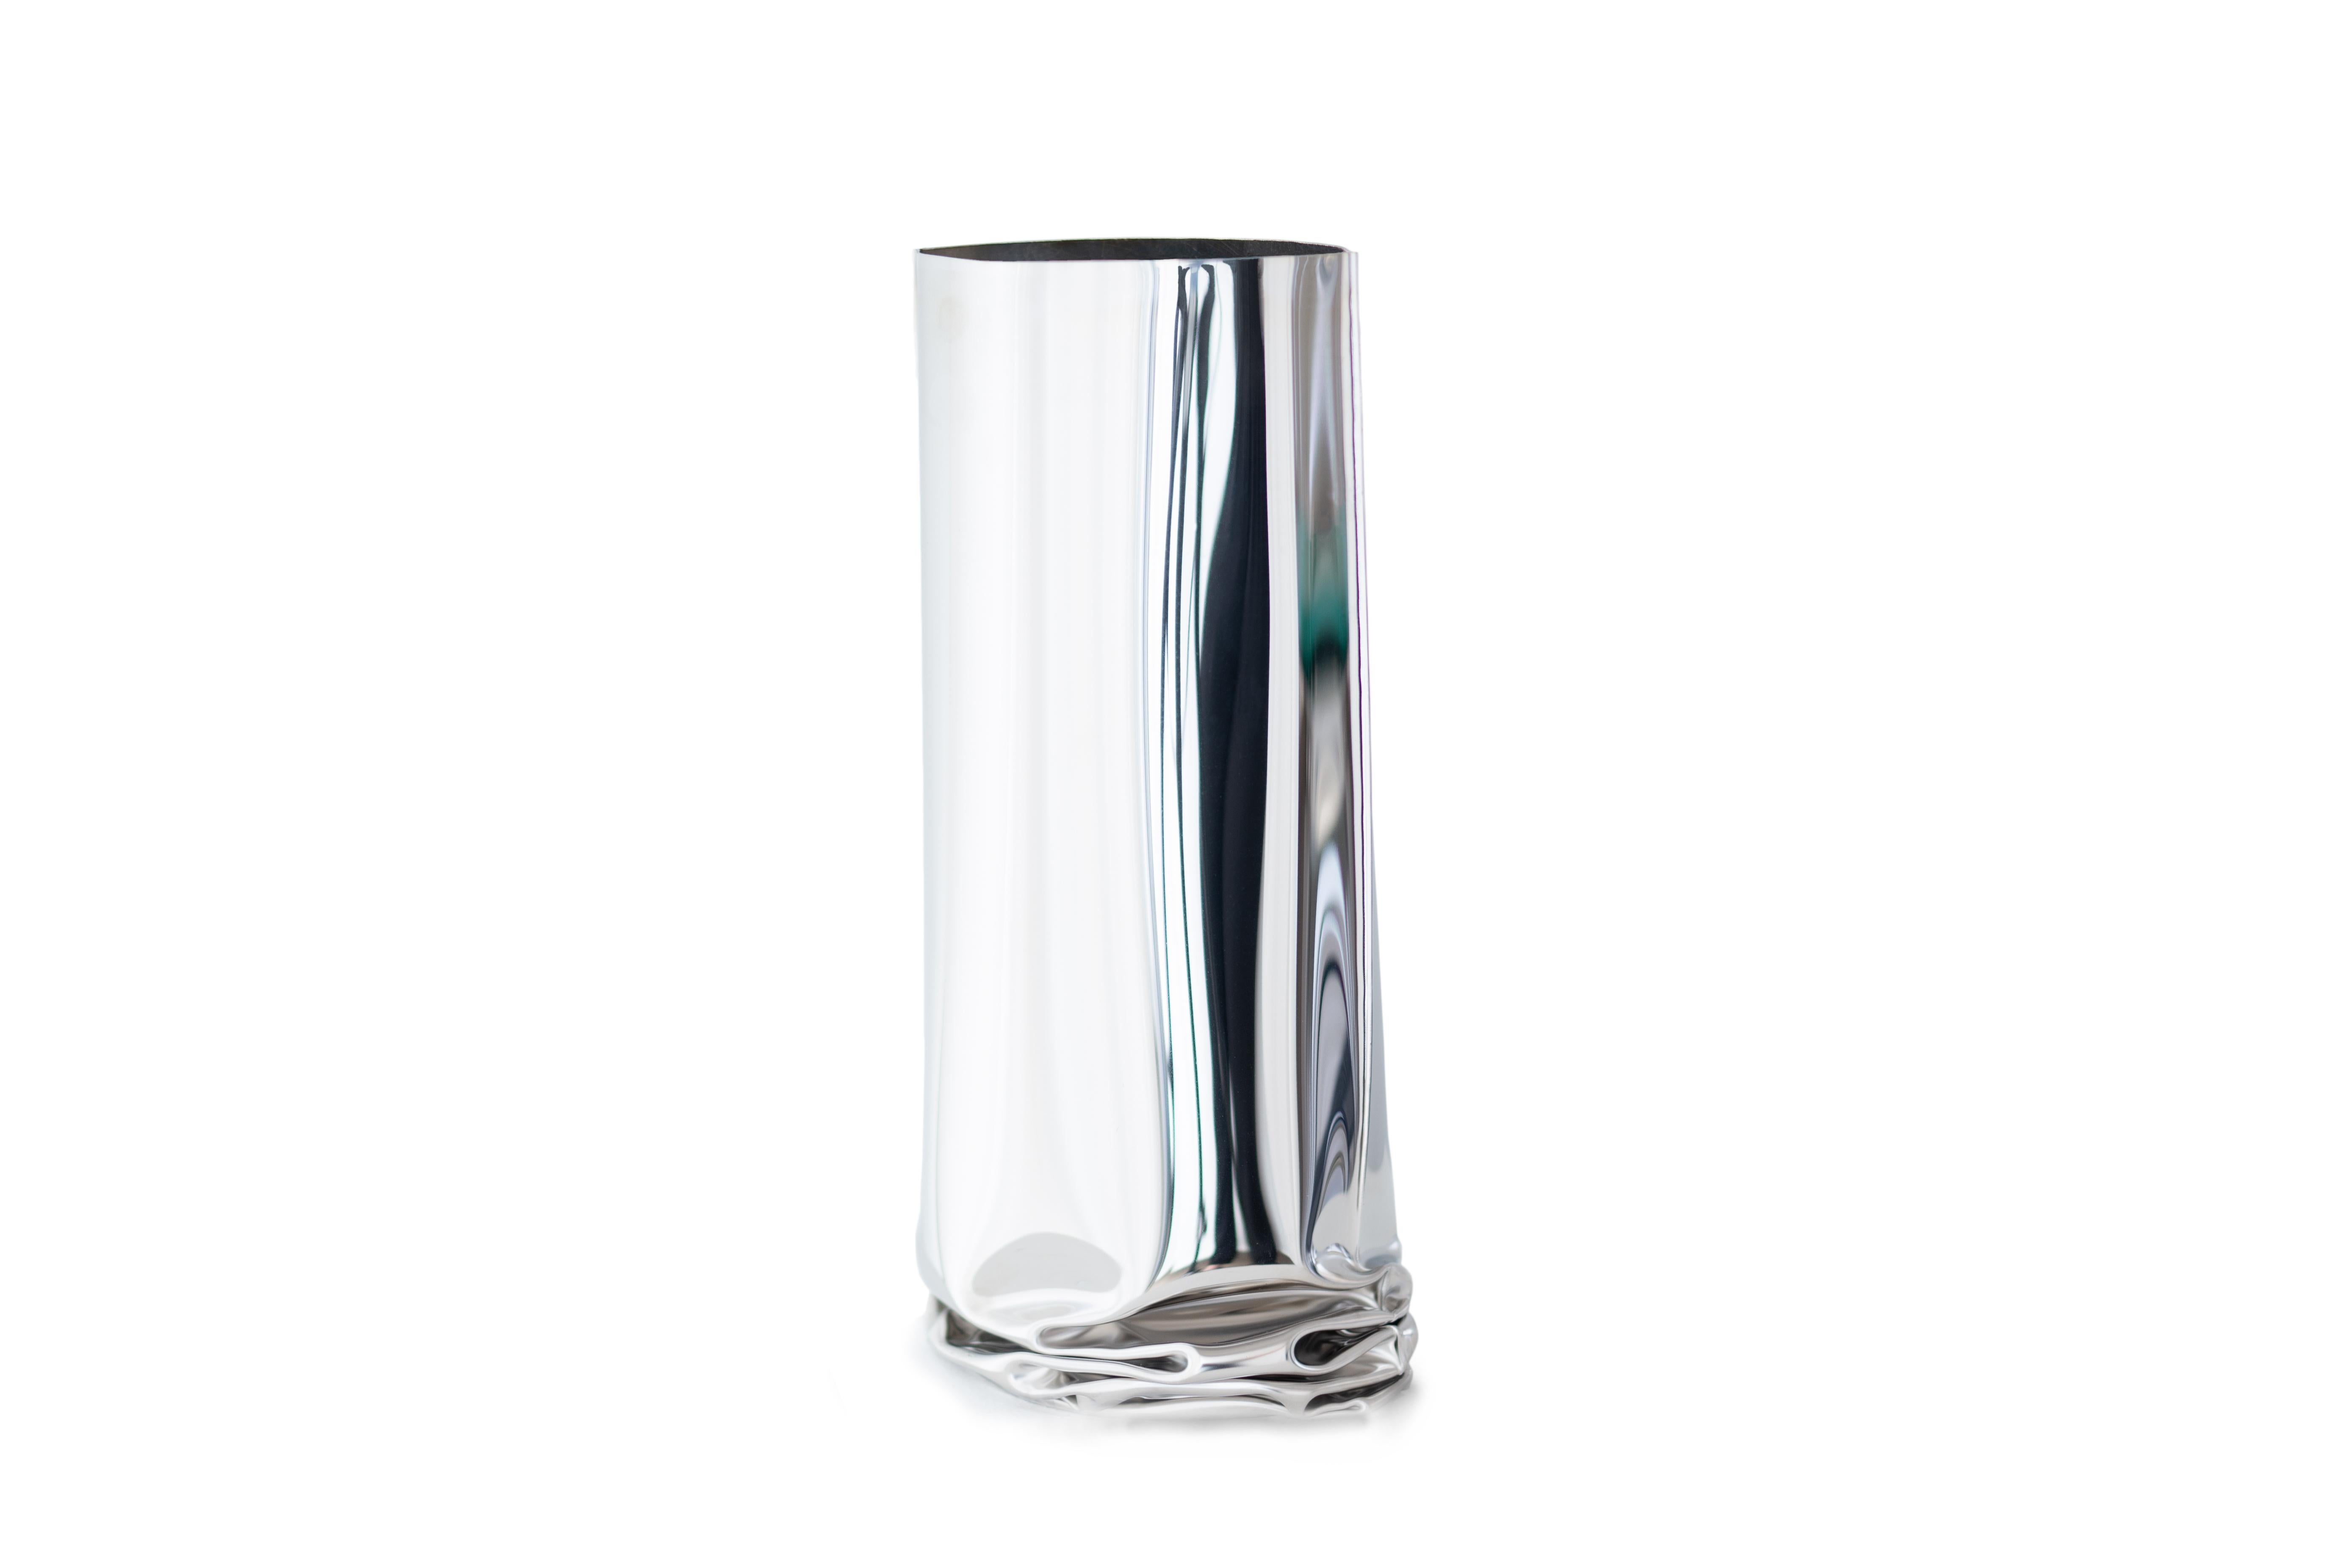 Organic Modern Contemporary Vase, 'Crash Vase' by Zieta, Medium, Stainless Steel For Sale